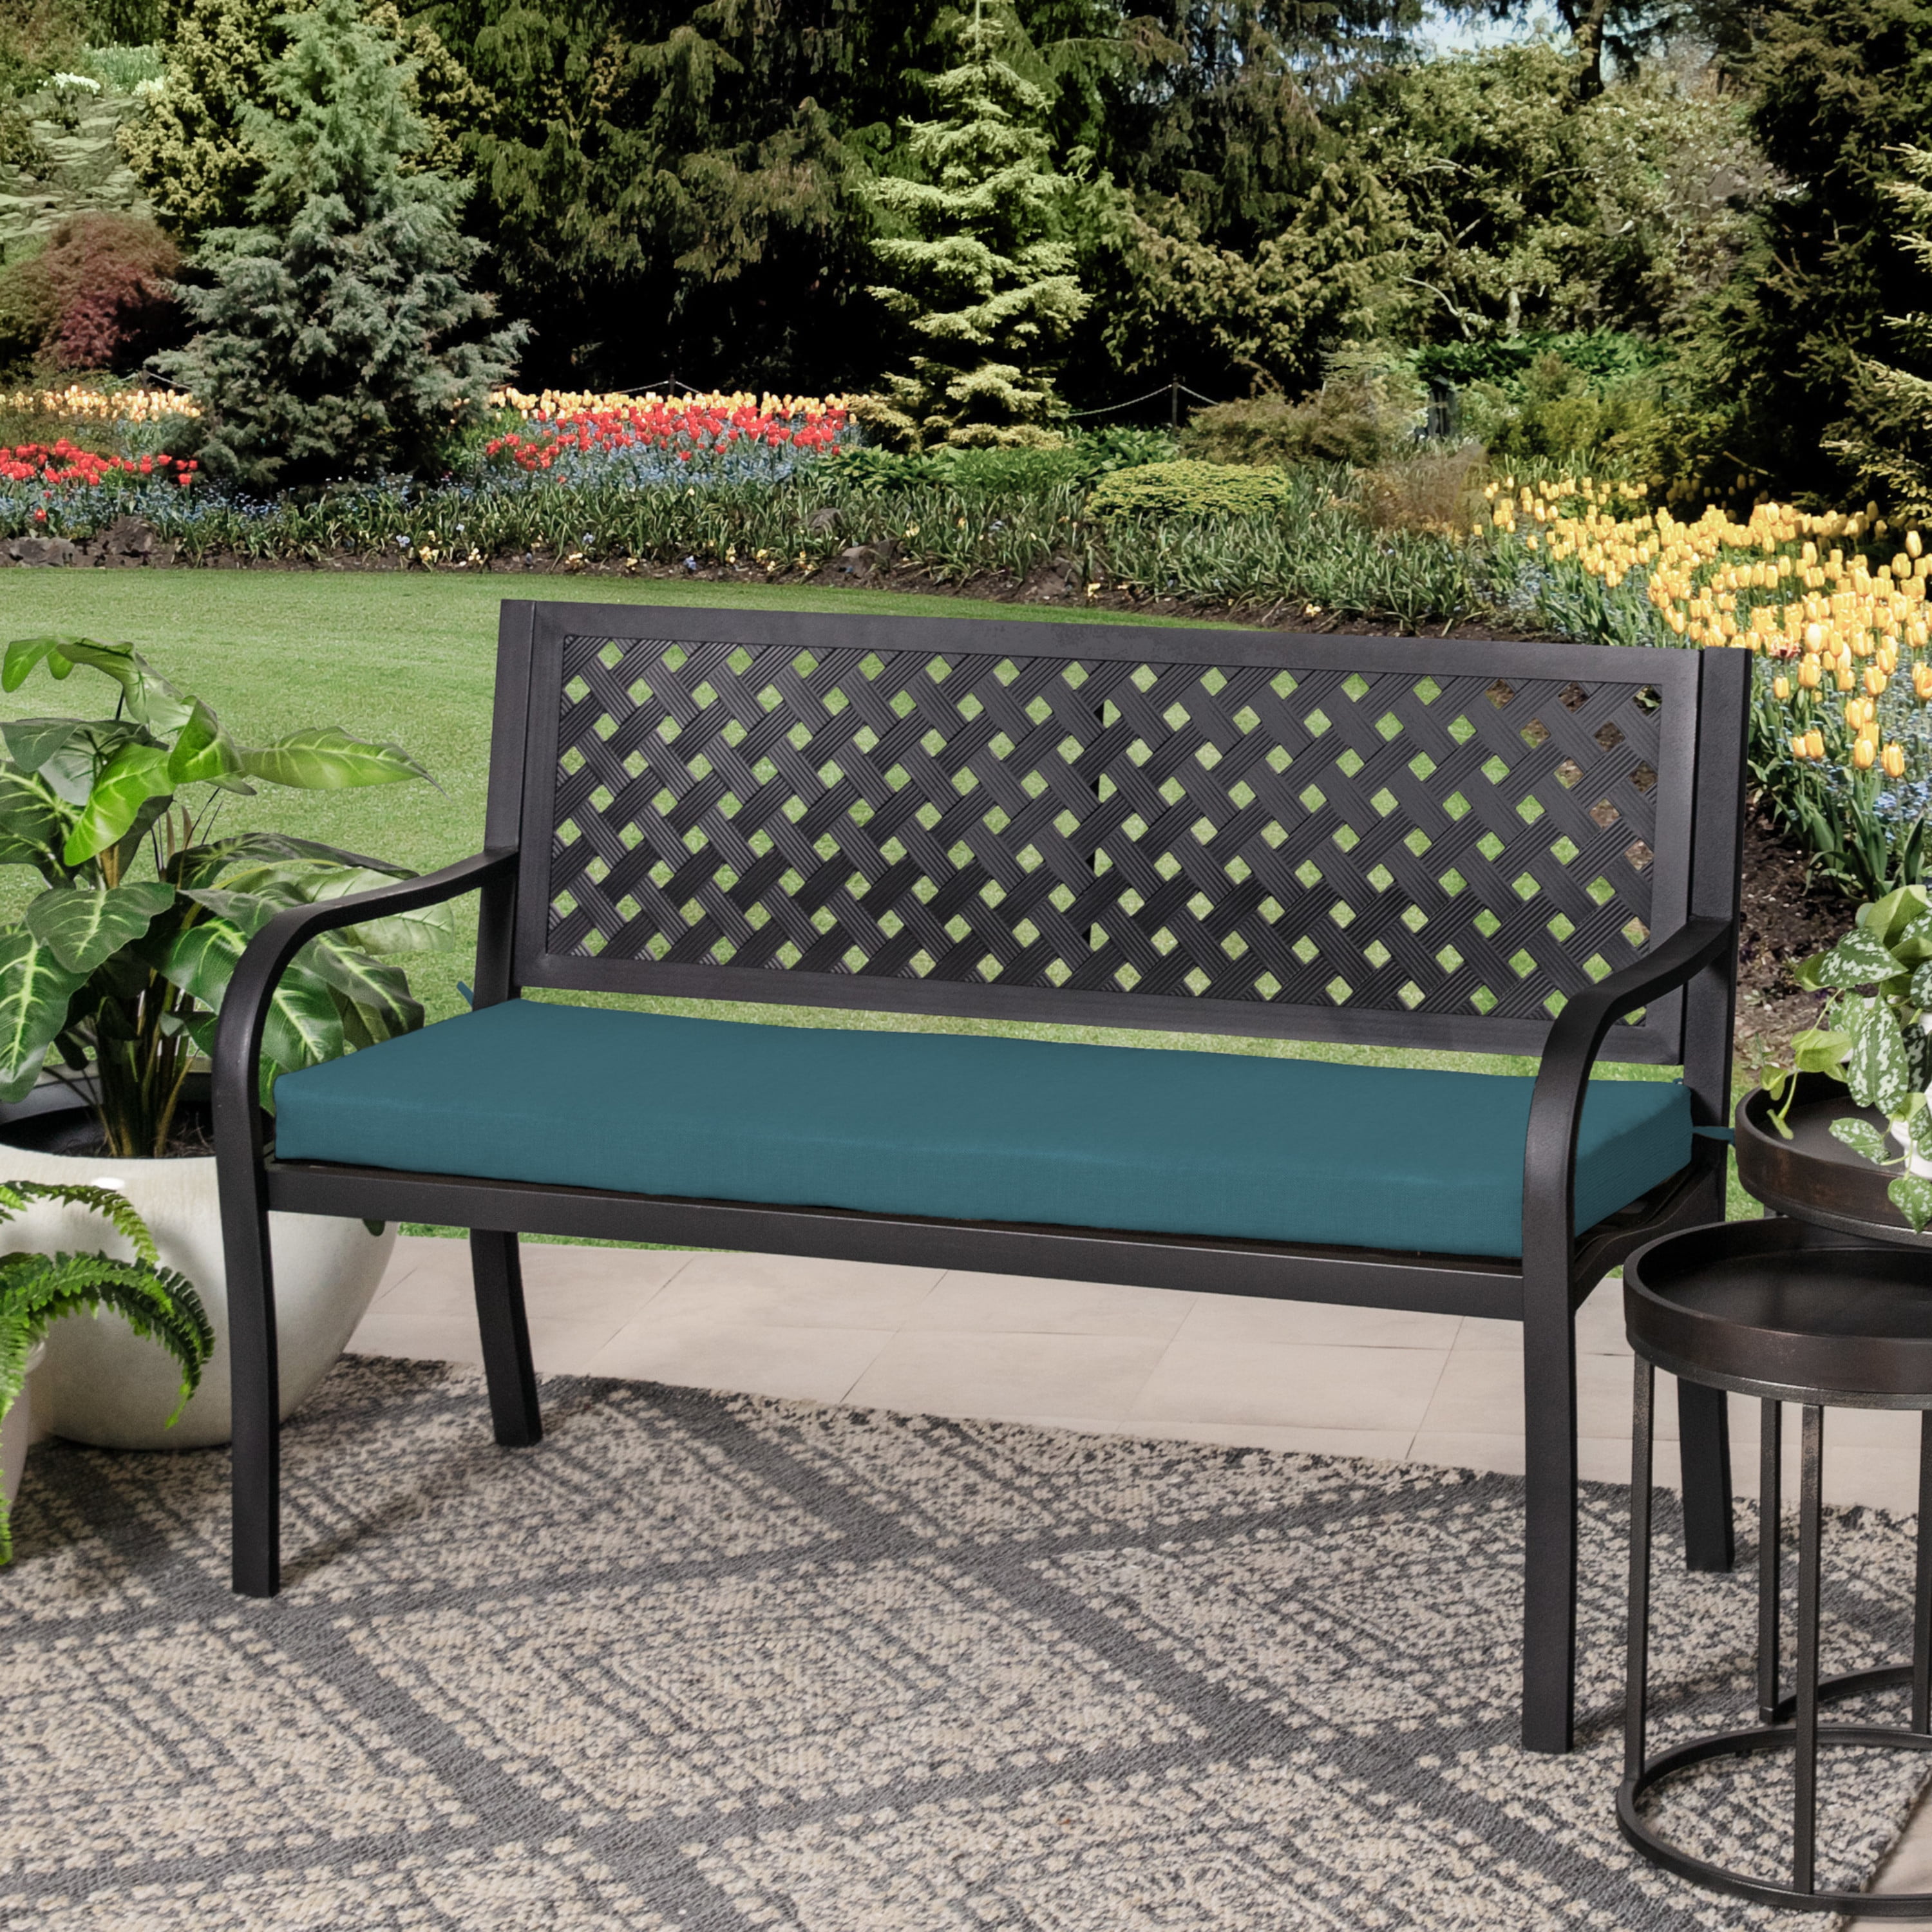 Outdoor Decor Flora Bench Seat Cushion 48 x 18 in Black